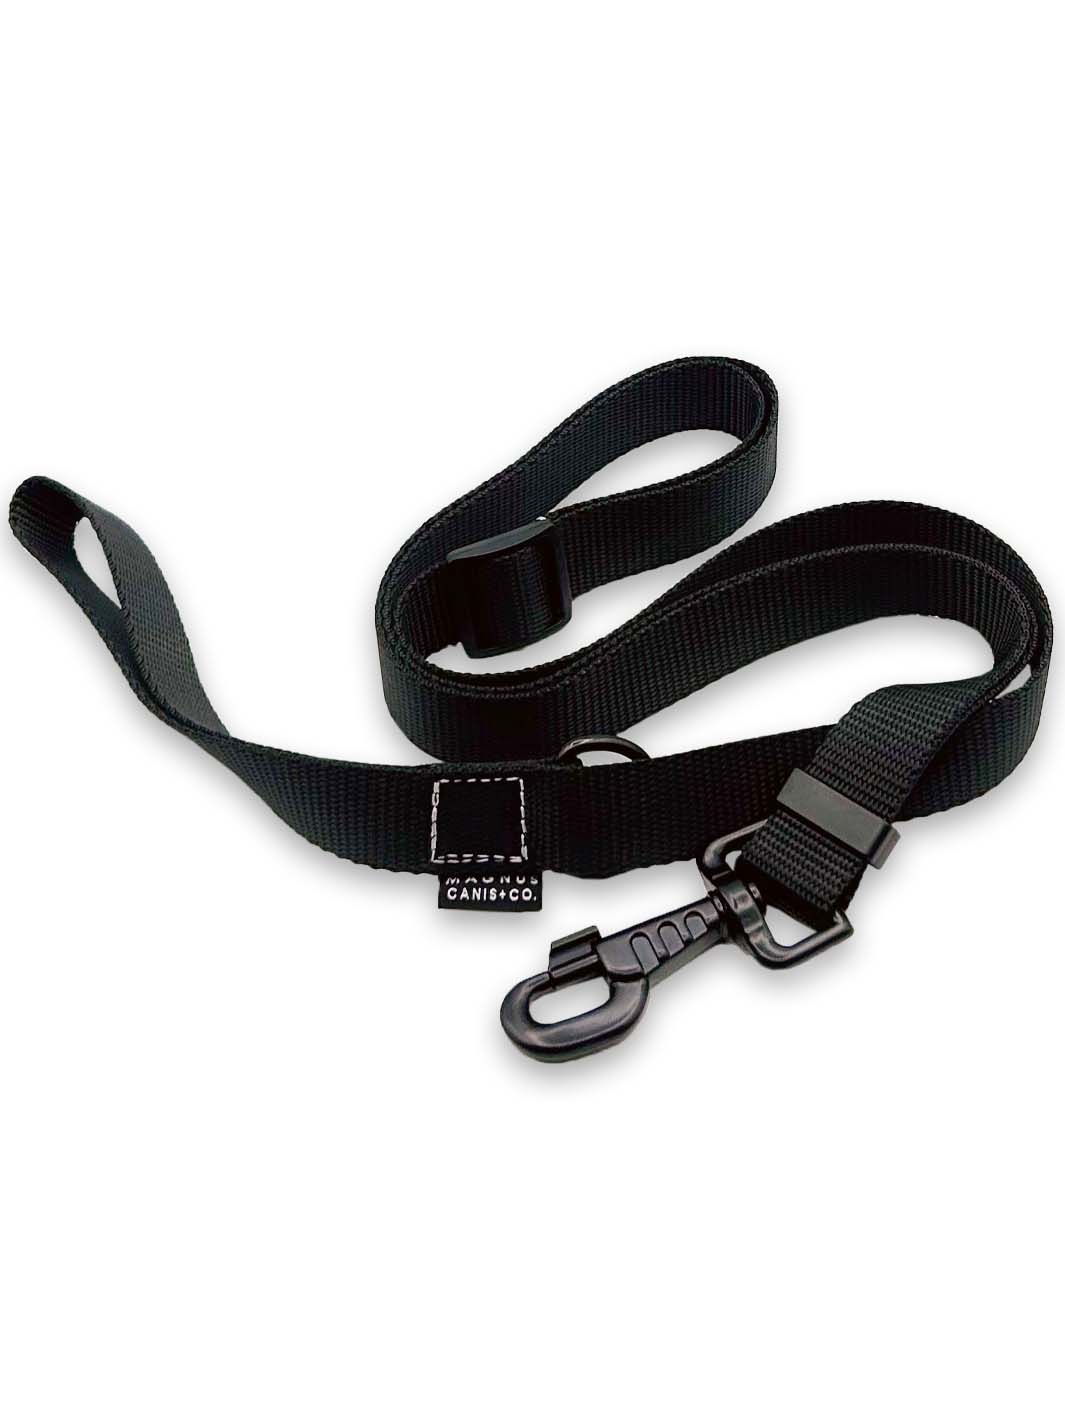 MAGNUS Canis black nylon strap webbing dog leash bundled up.